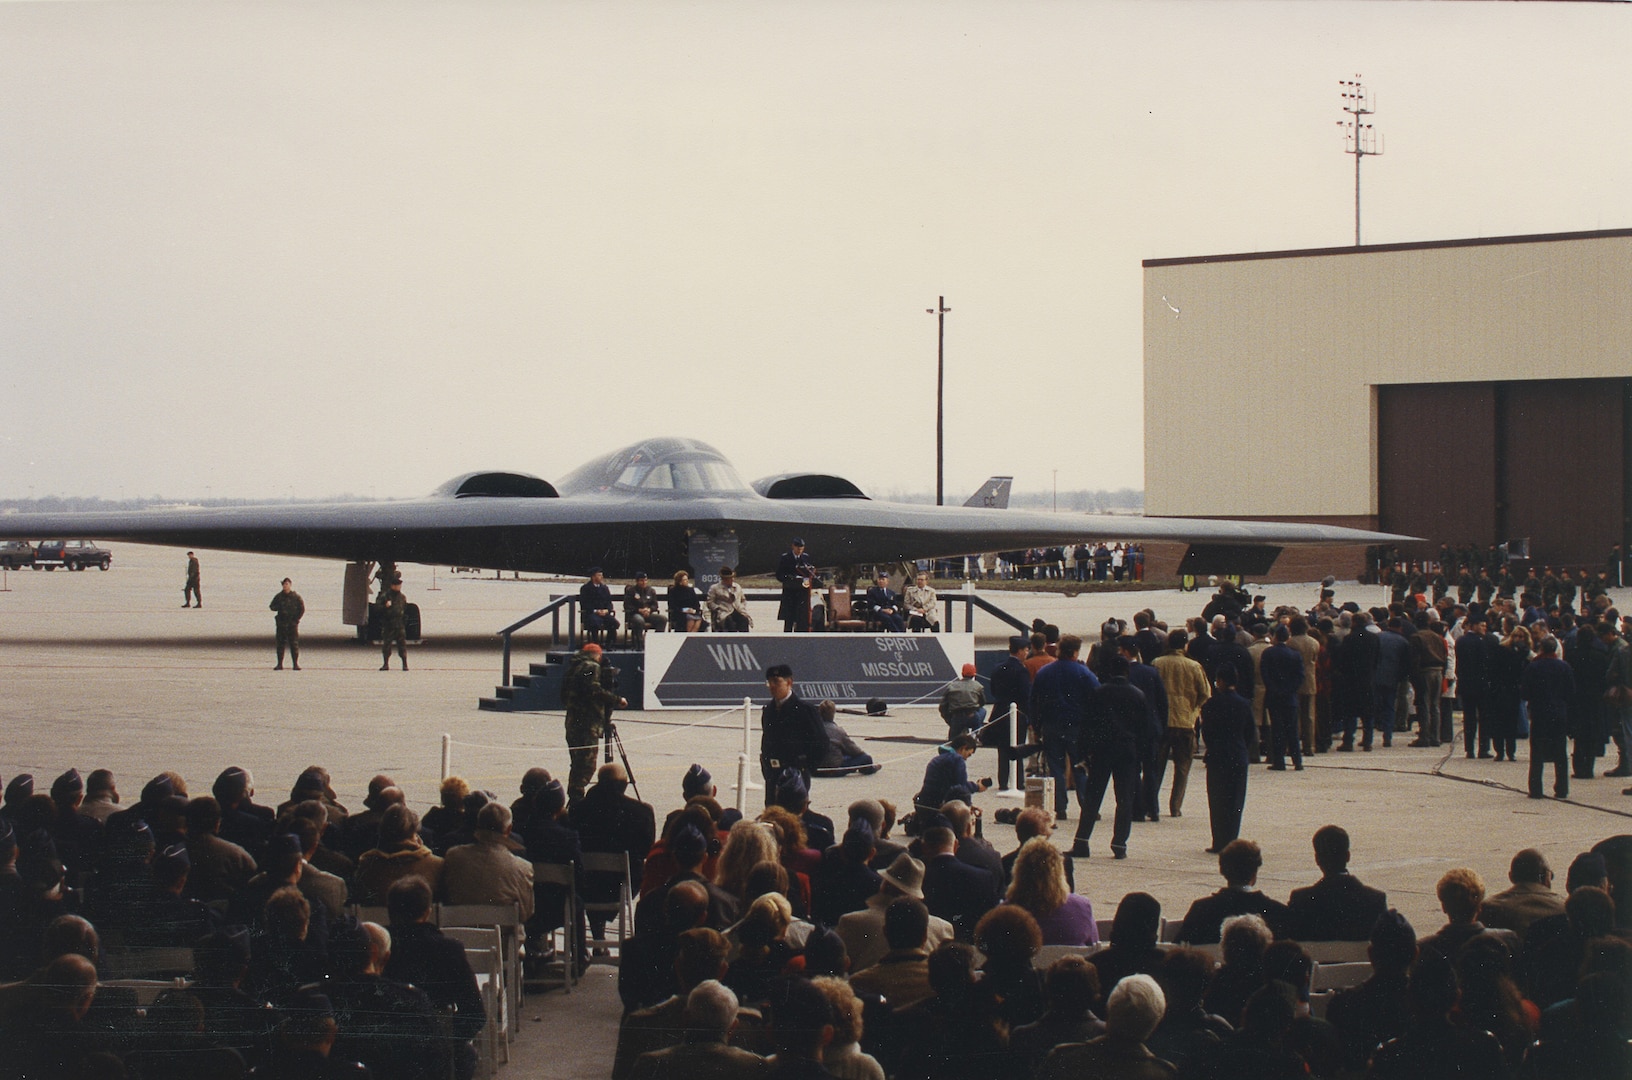 B-2 Spirit welcoming ceremony